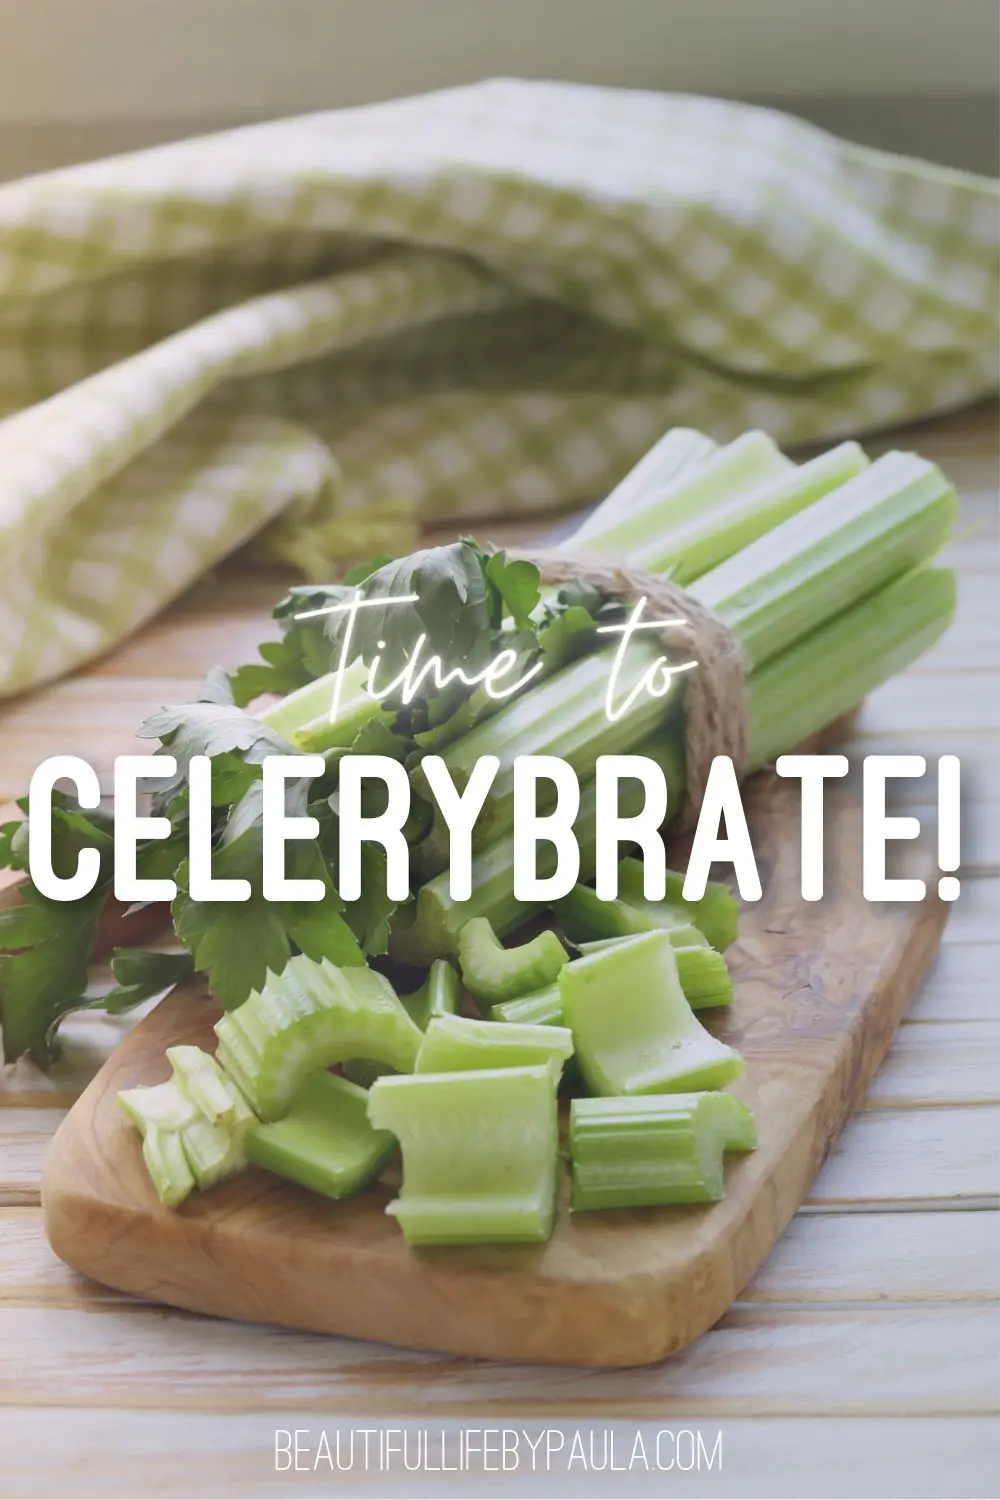 time to celery-brate pun